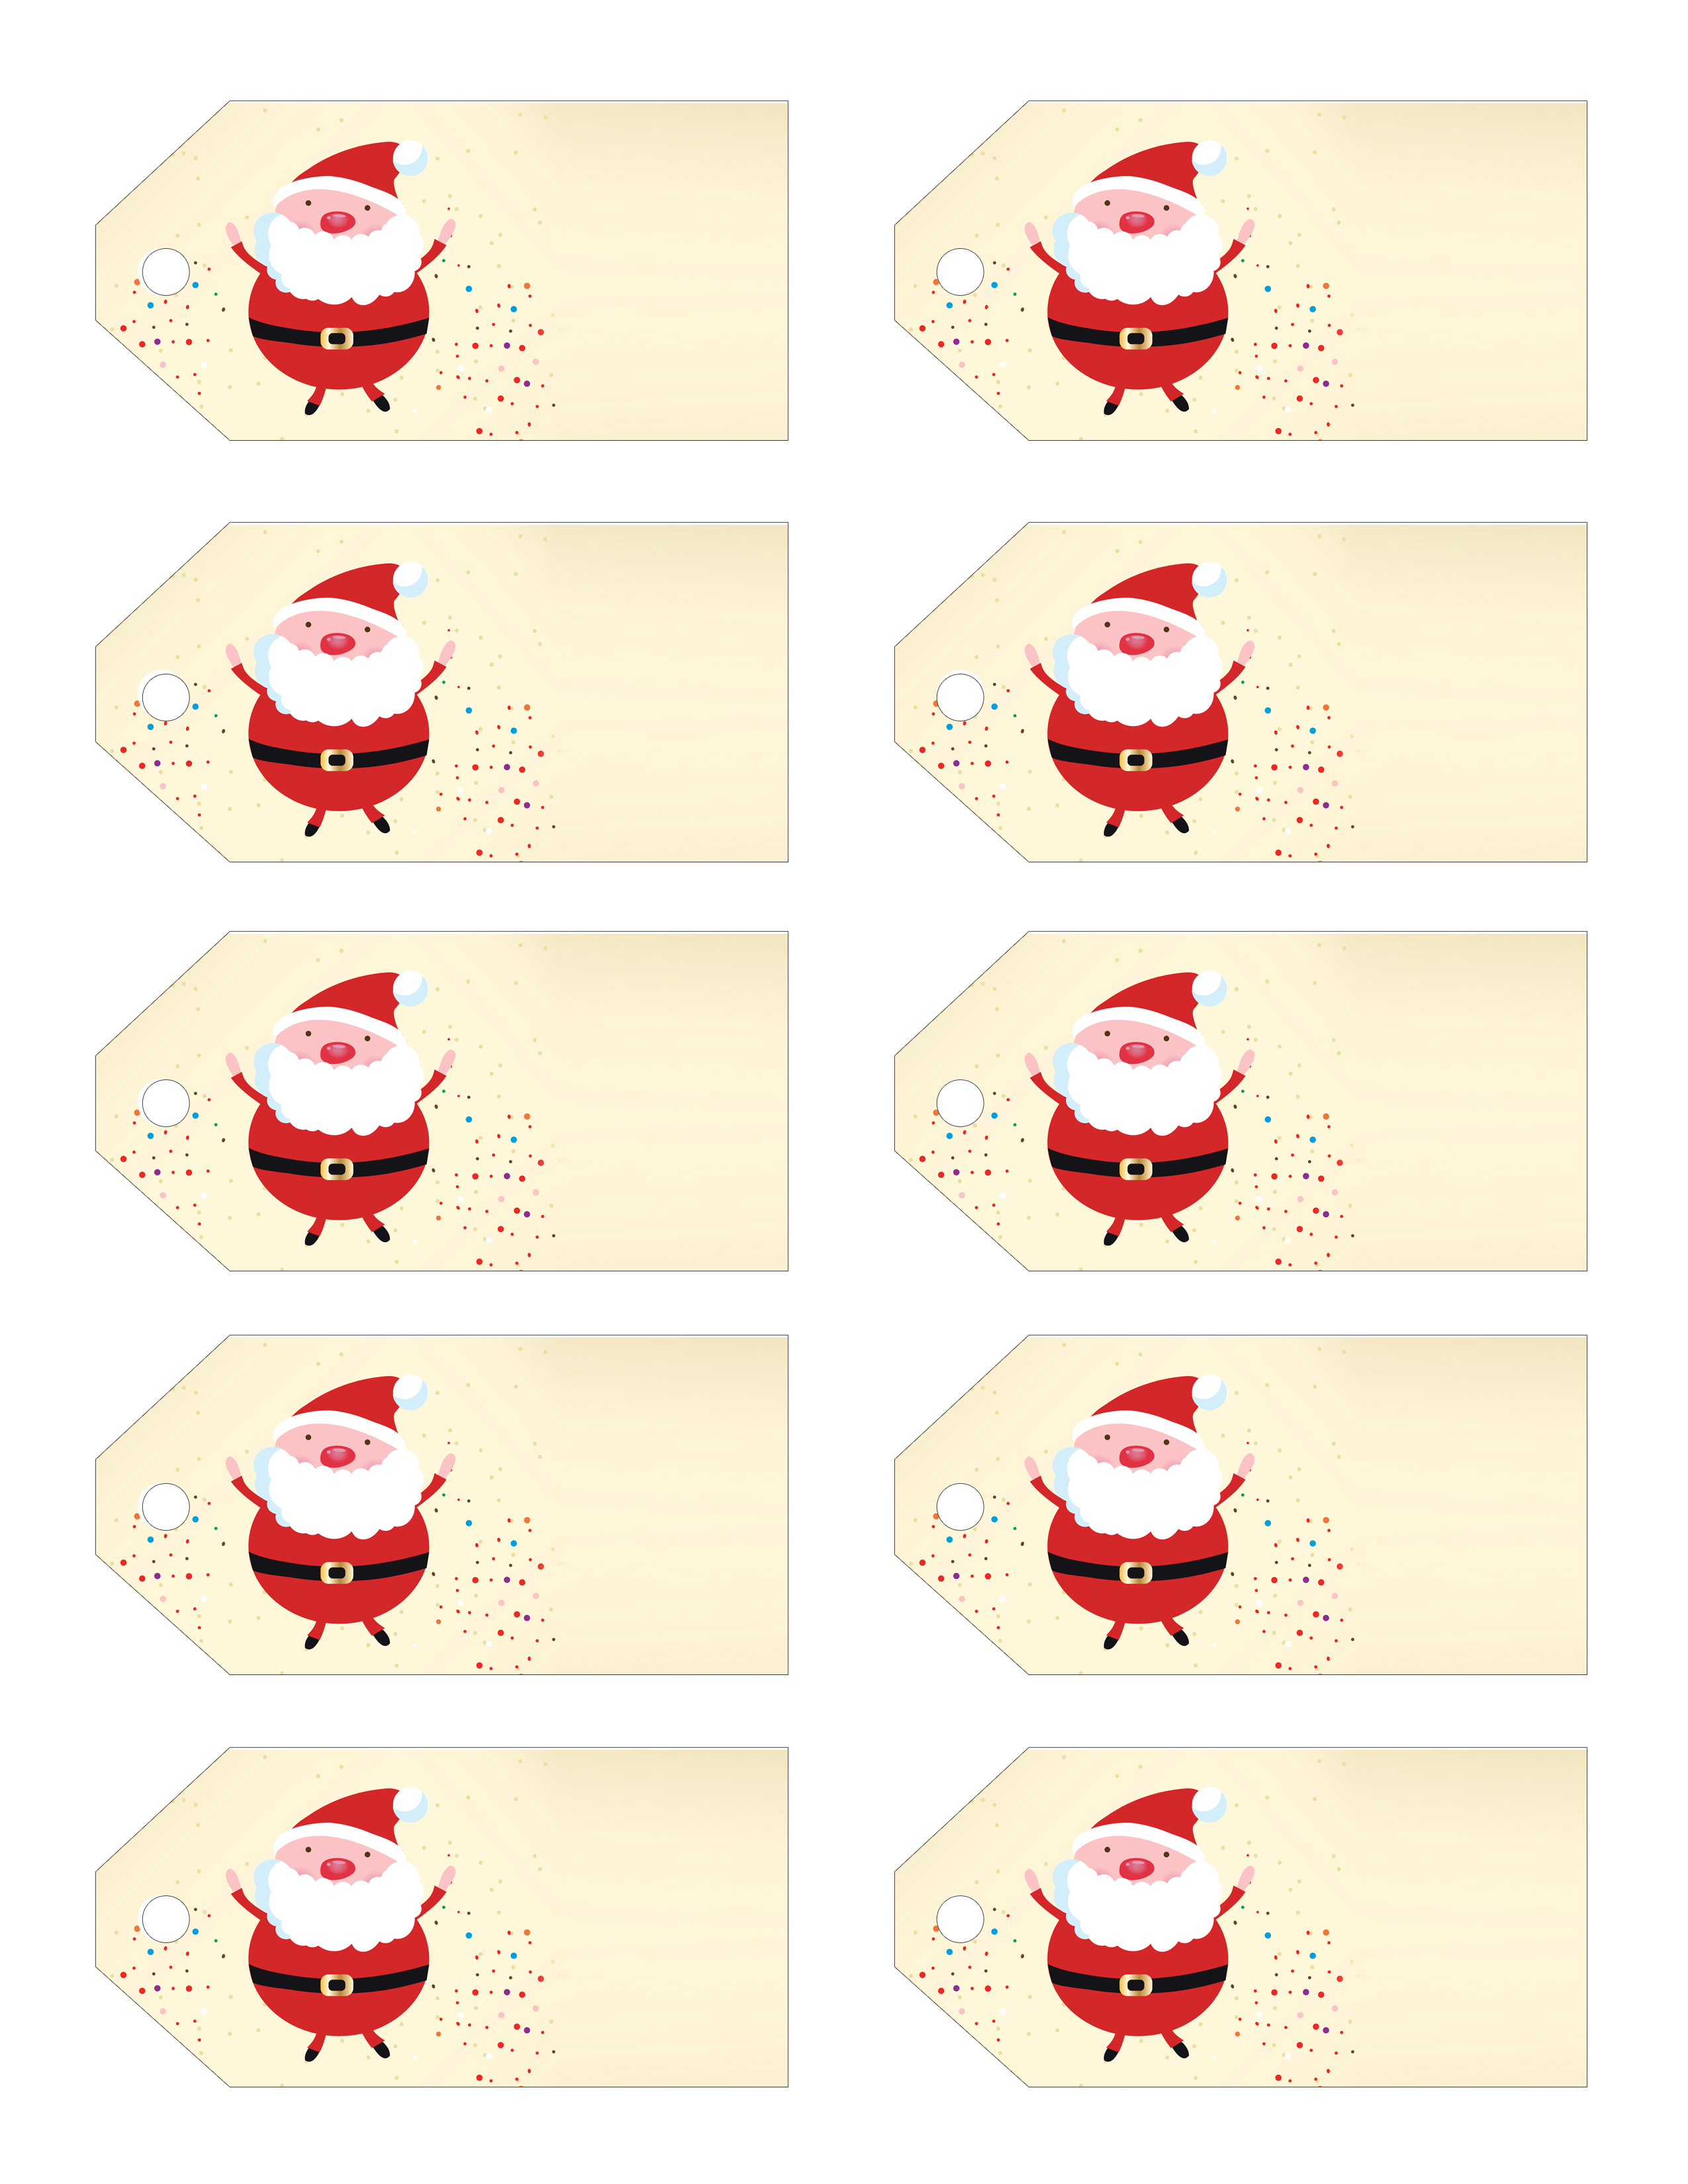 10 Best Free Printable Christmas Gift Tags From Santa - printablee.com